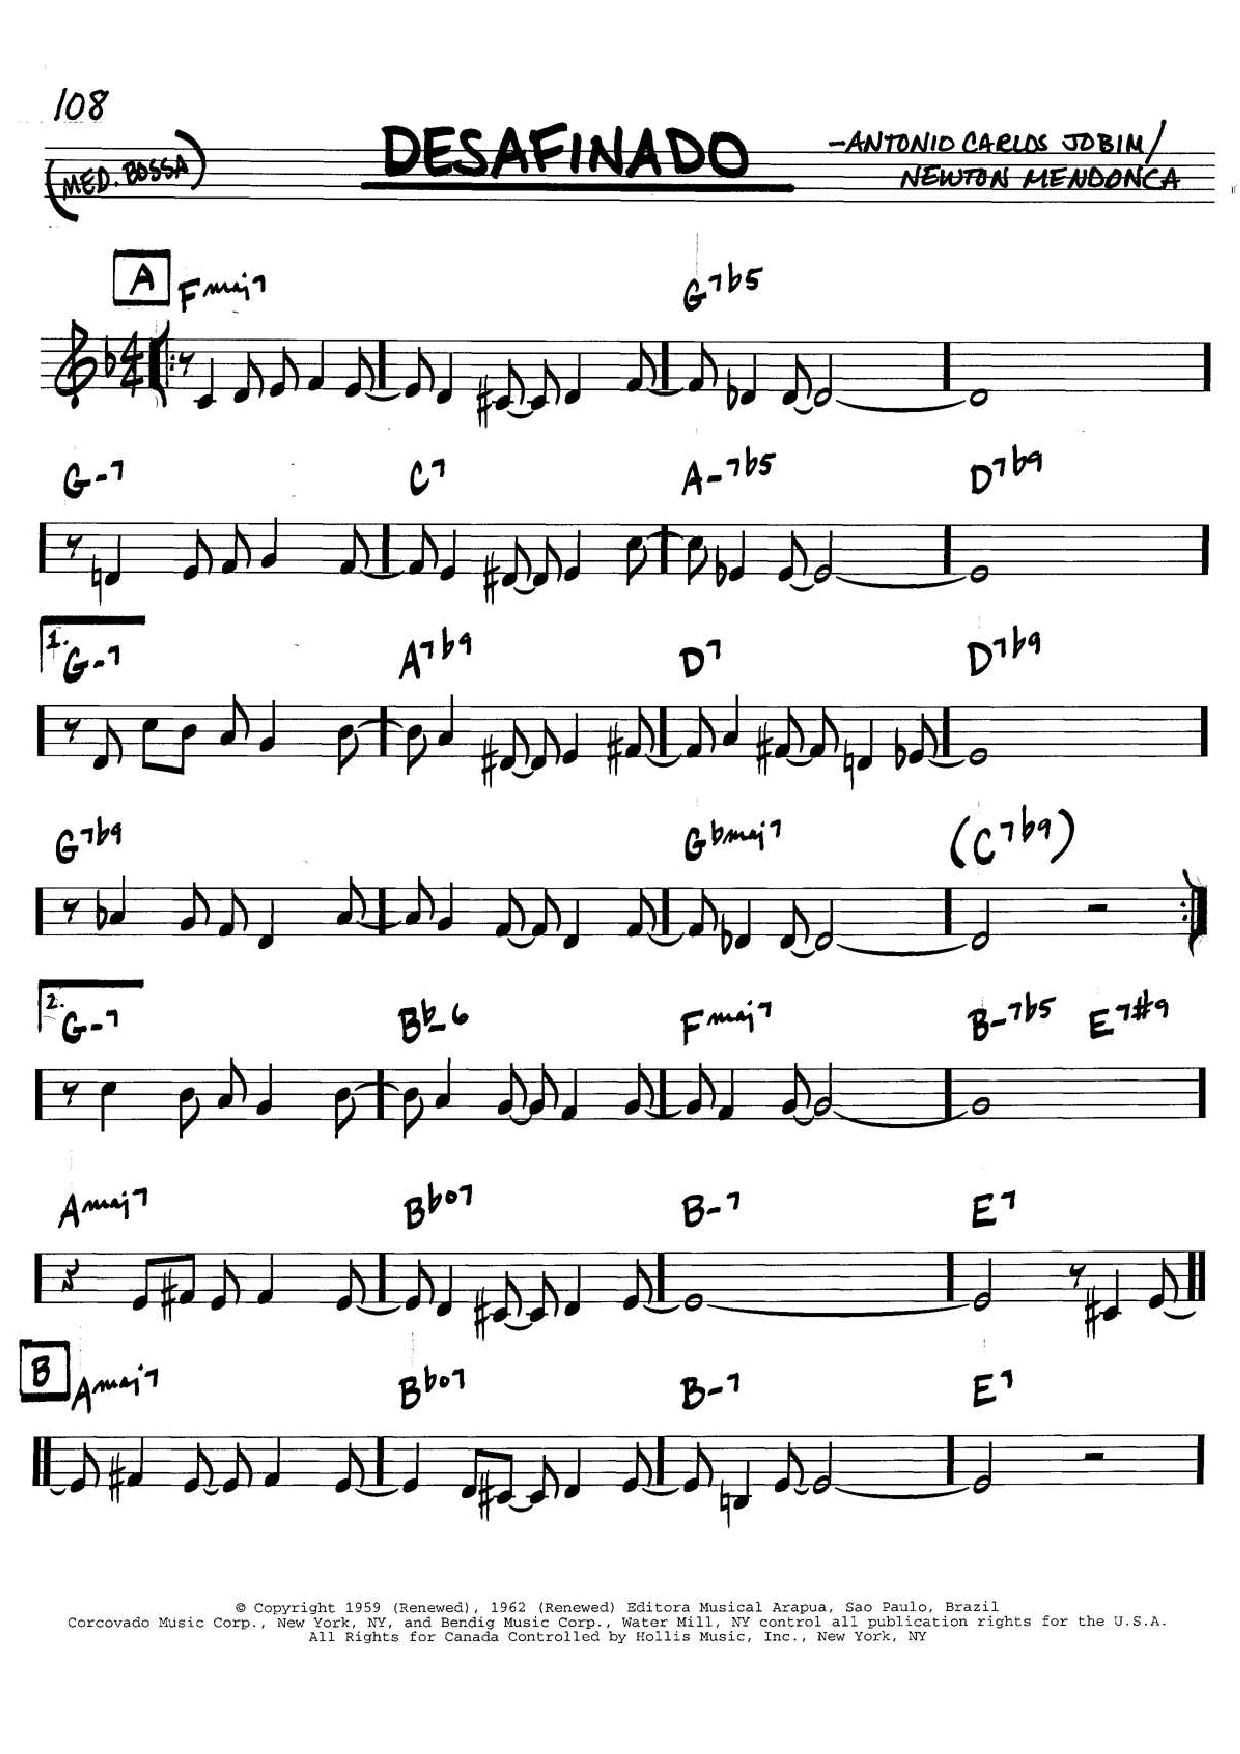 Antonio Carlos Jobim Desafinado sheet music notes and chords. Download Printable PDF.